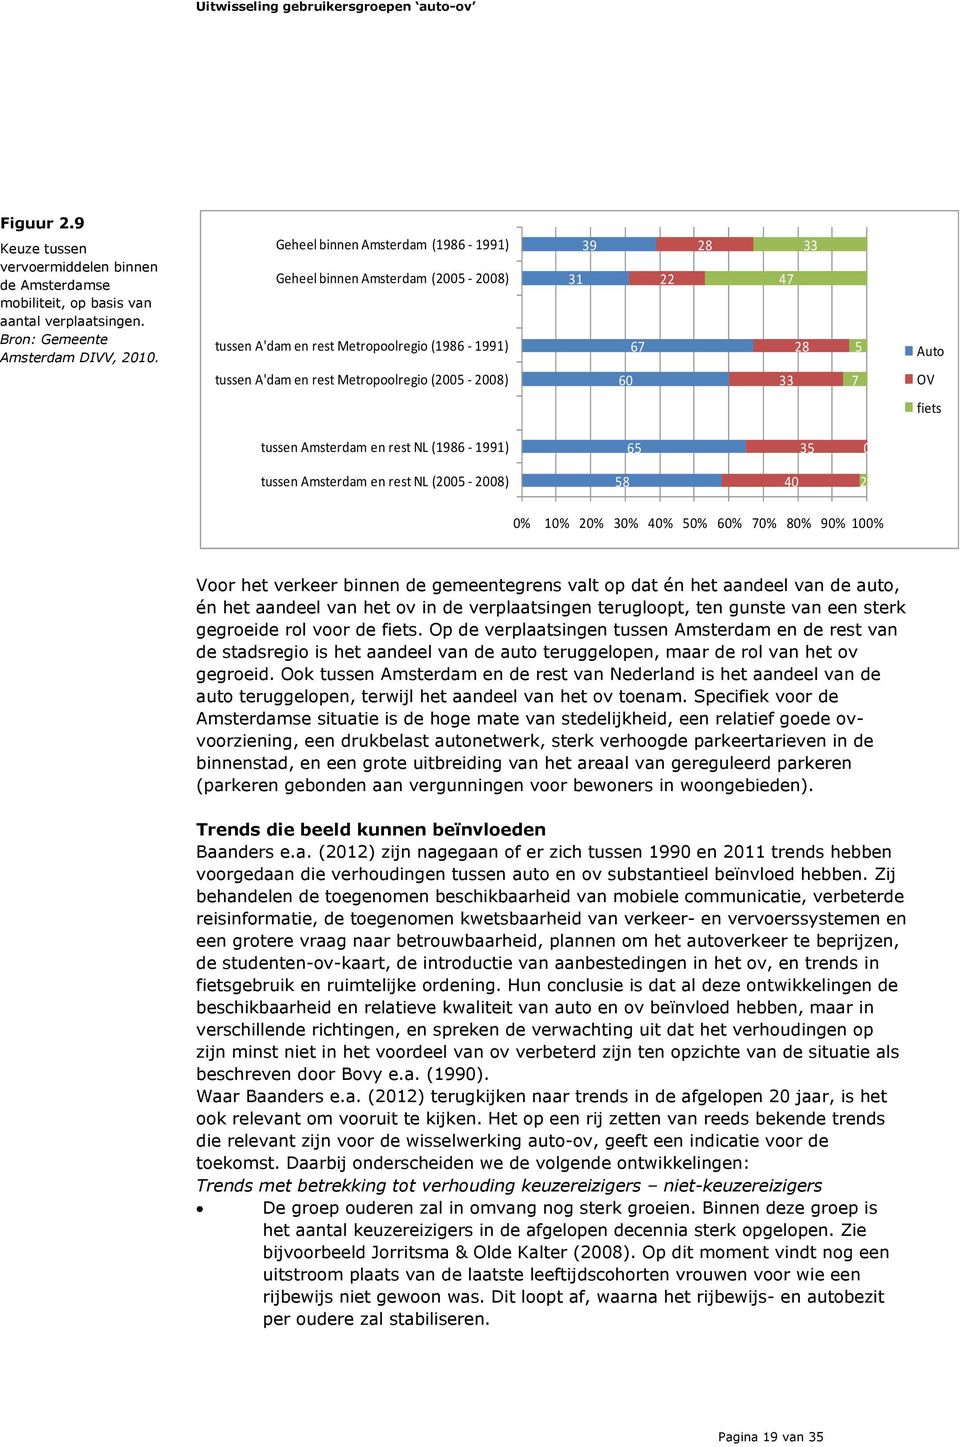 7 Auto OV fiets tussen Amsterdam en rest NL (1986-1991) 65 35 0 tussen Amsterdam en rest NL (2005-2008) 58 40 2 0% 10% 20% 30% 40% 50% 60% 70% 80% 90% 100% Voor het verkeer binnen de gemeentegrens